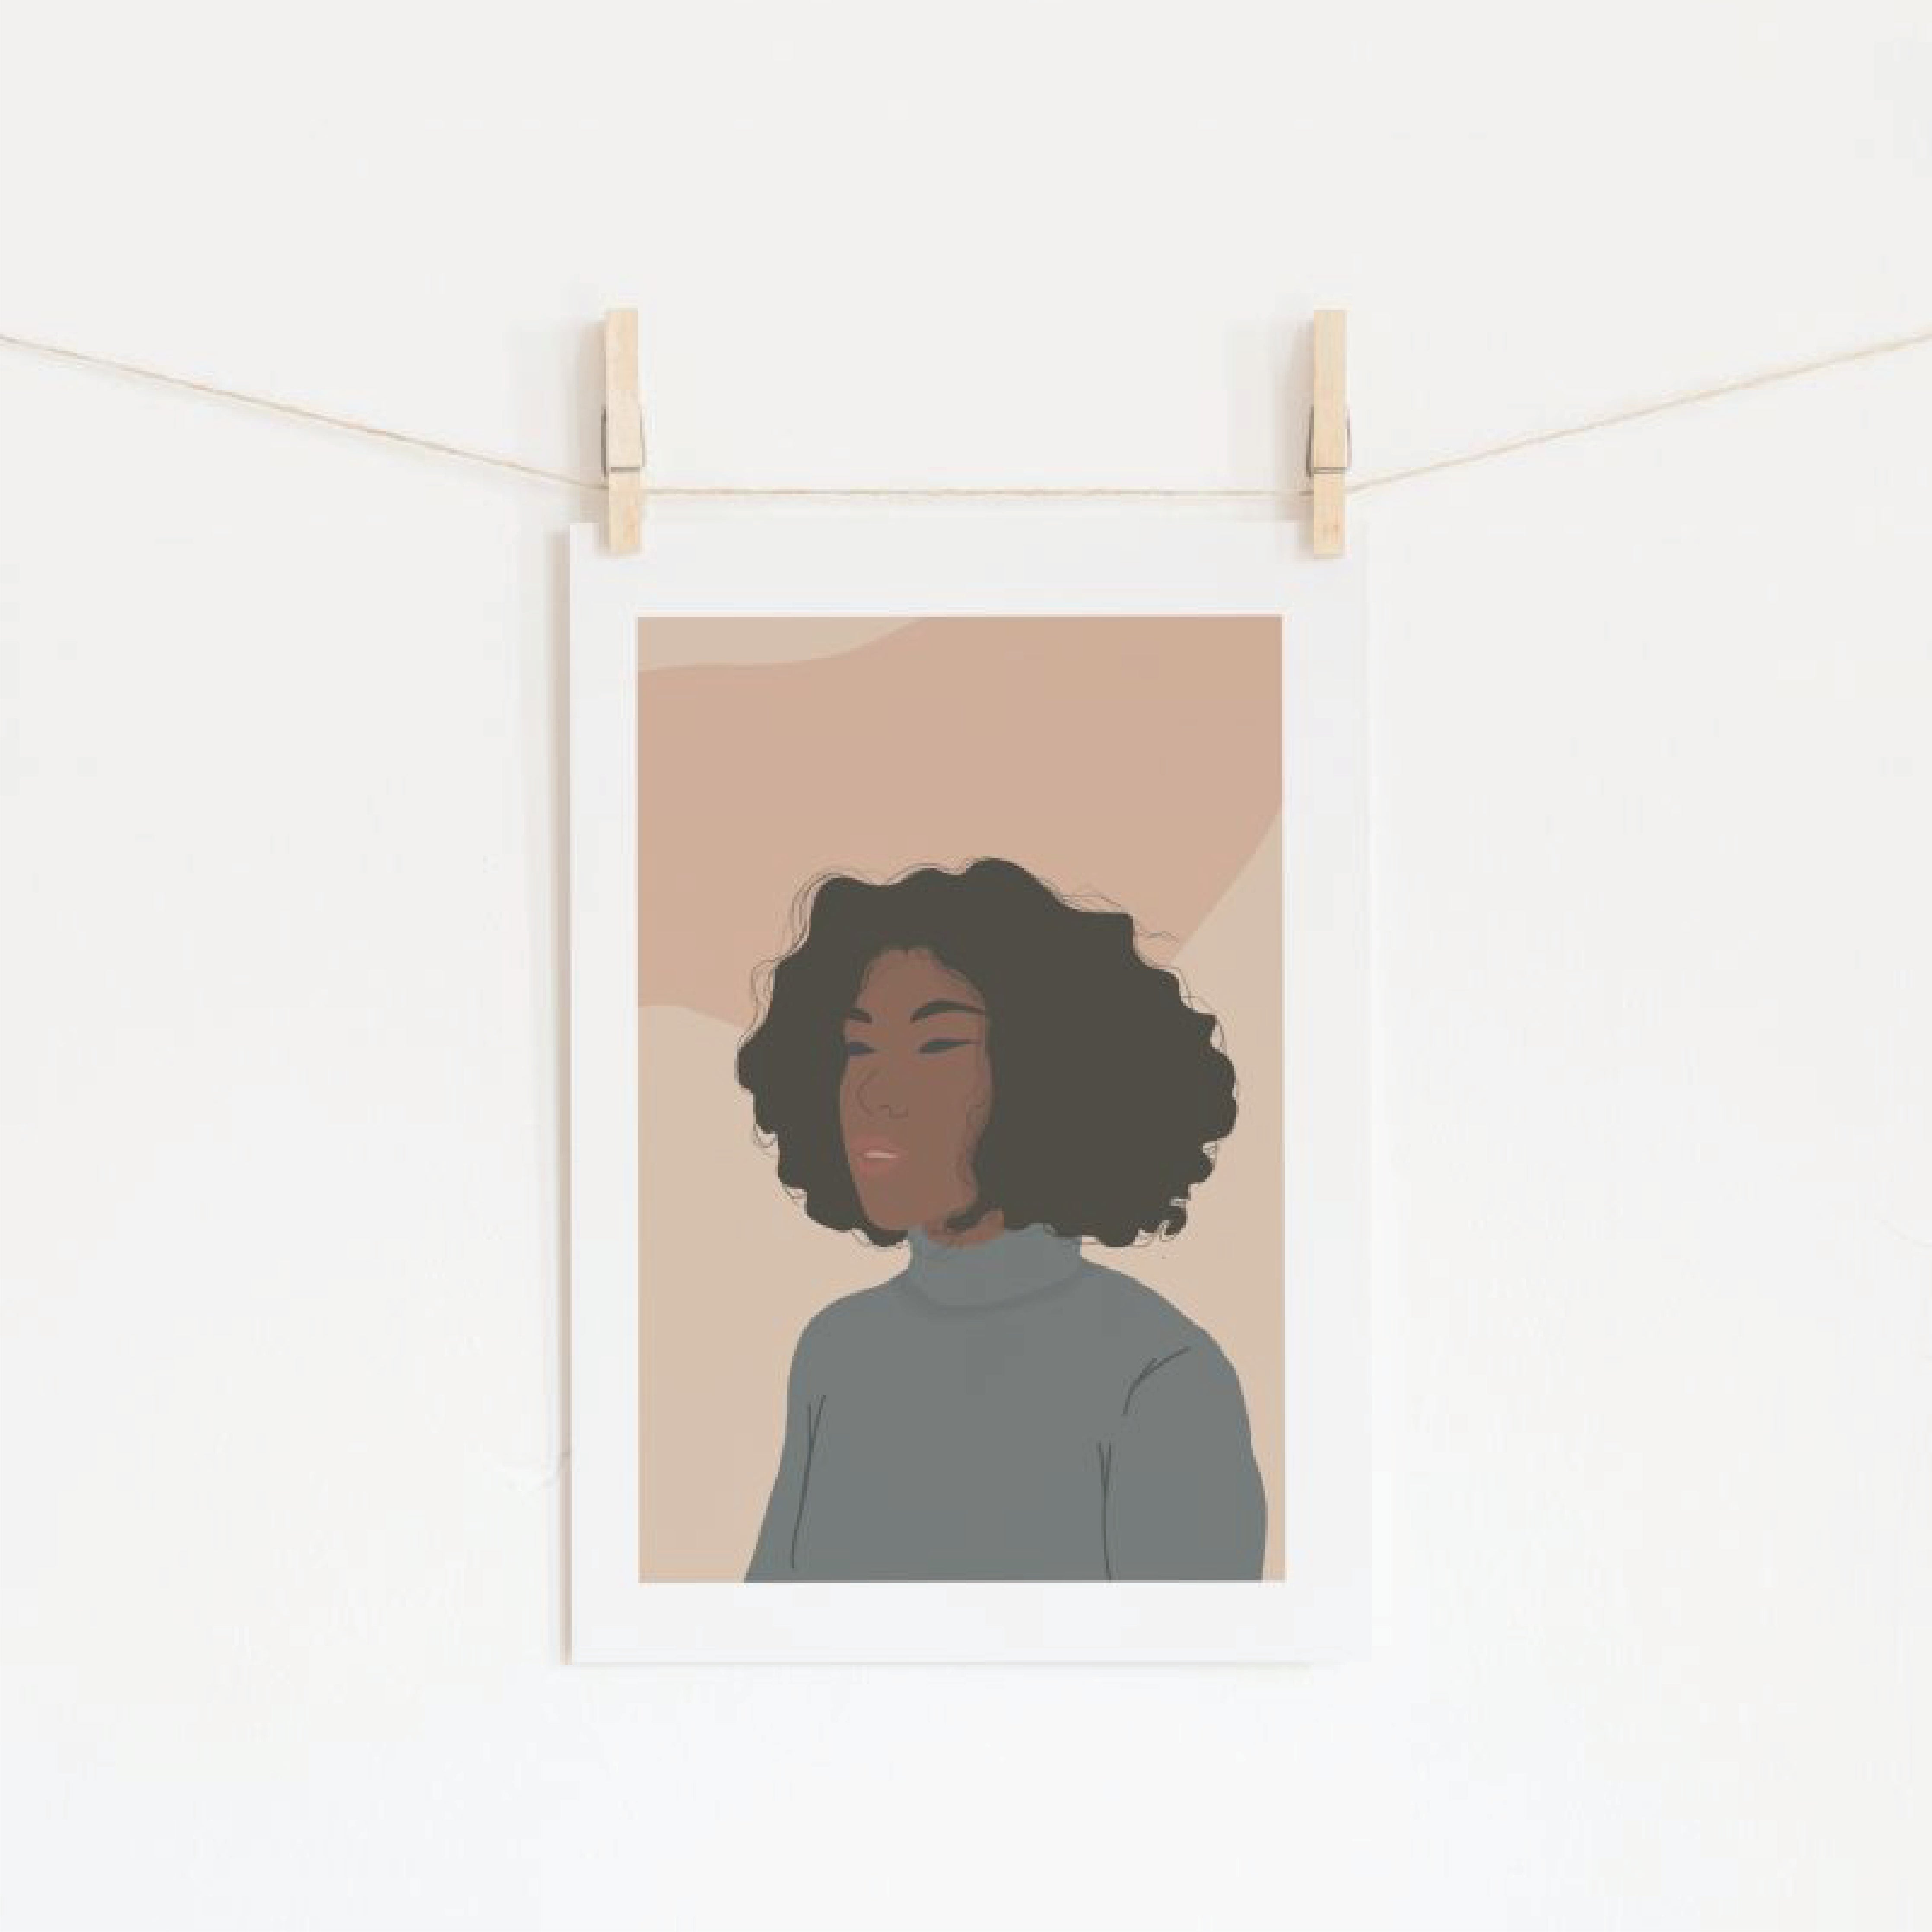 Curly Hair Girl Abstract Illustration A4 art print wall décor